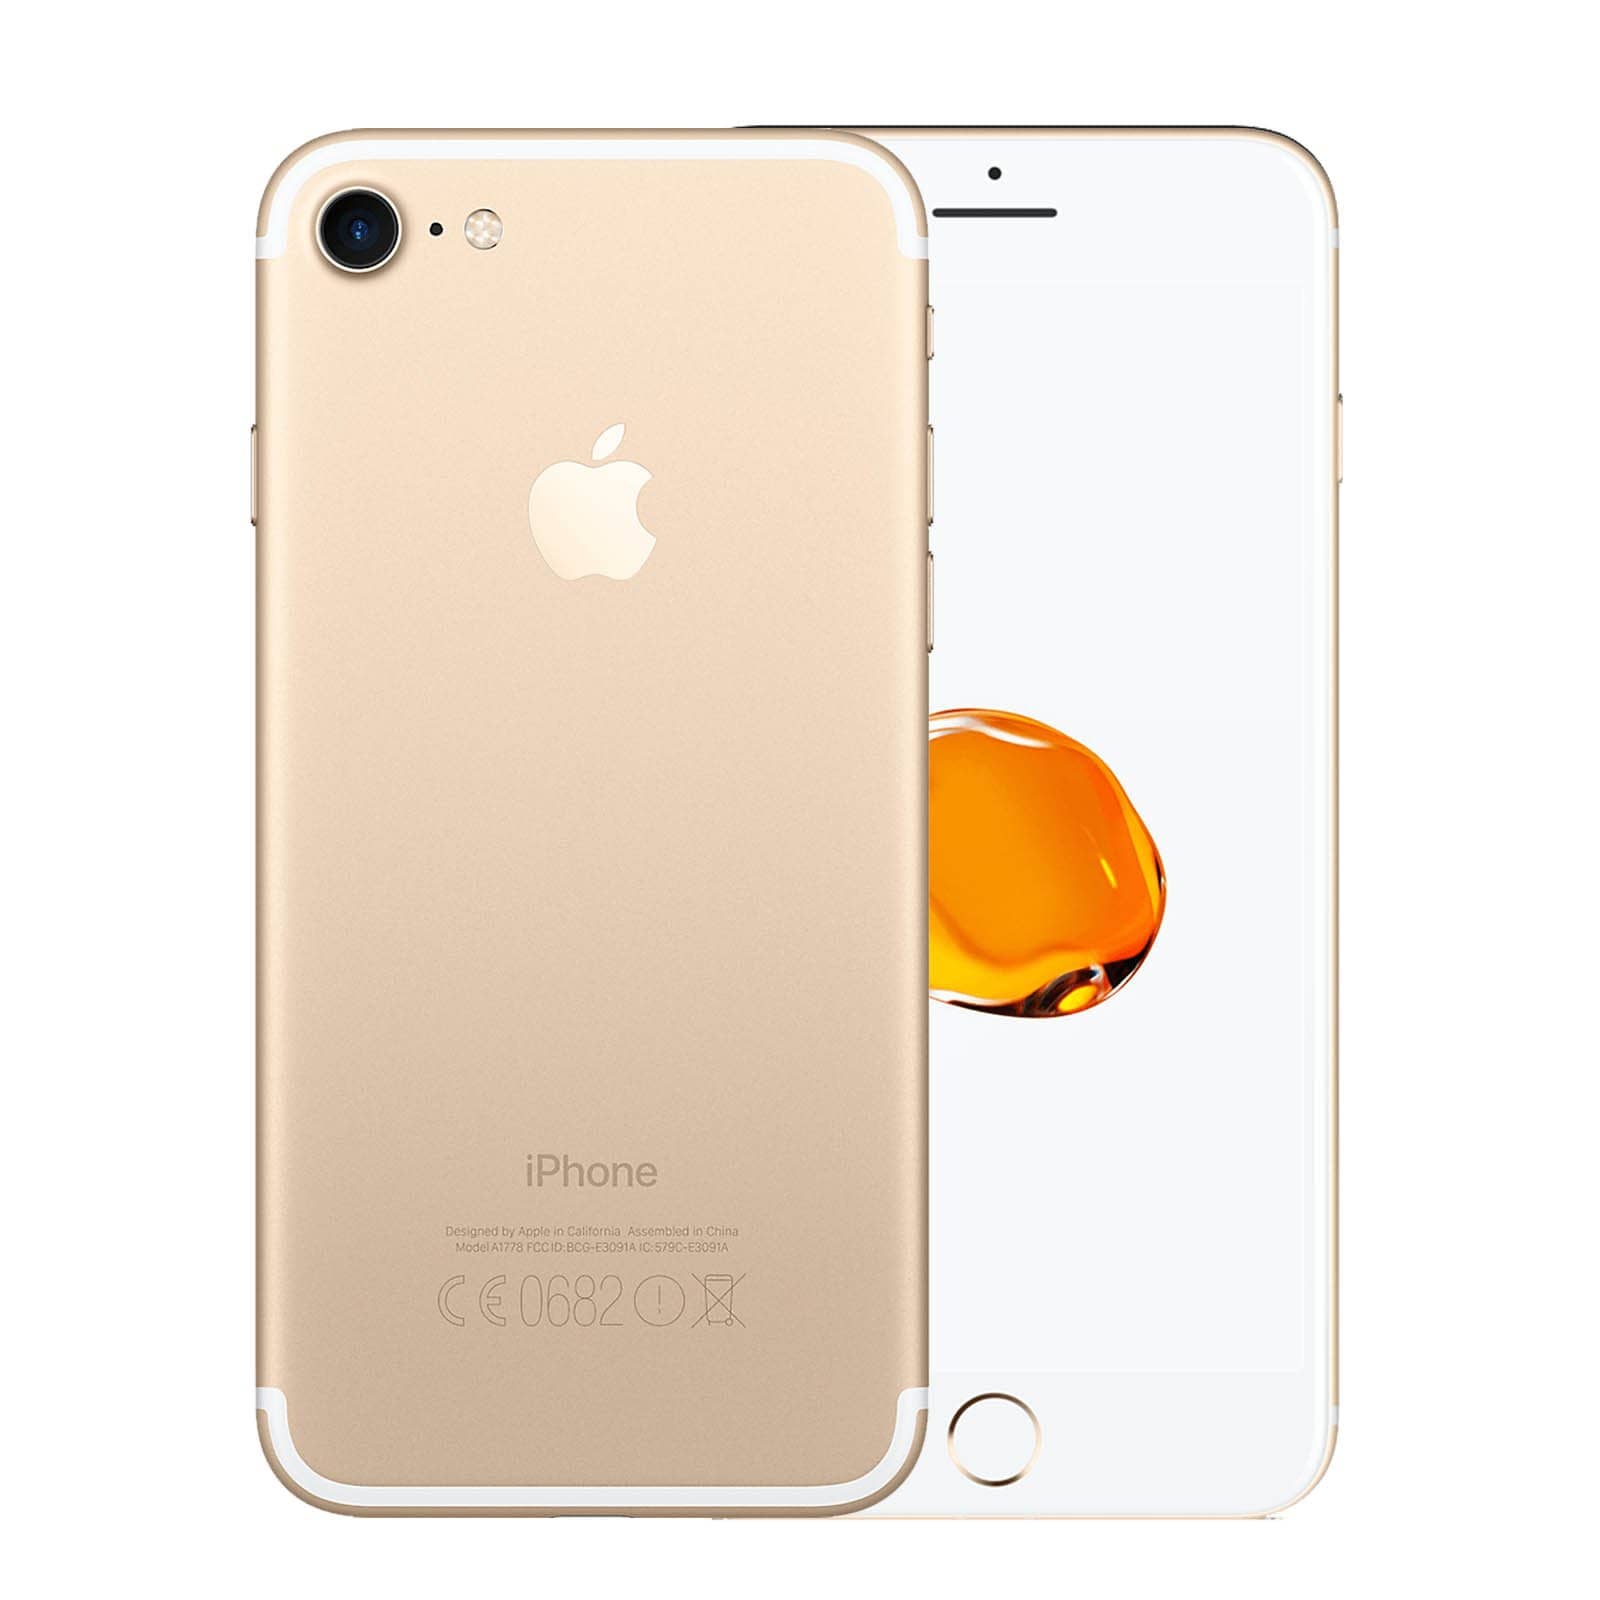 Apple iPhone 7 128GB Gold Very Good - Unlocked 128GB Gold Very Good